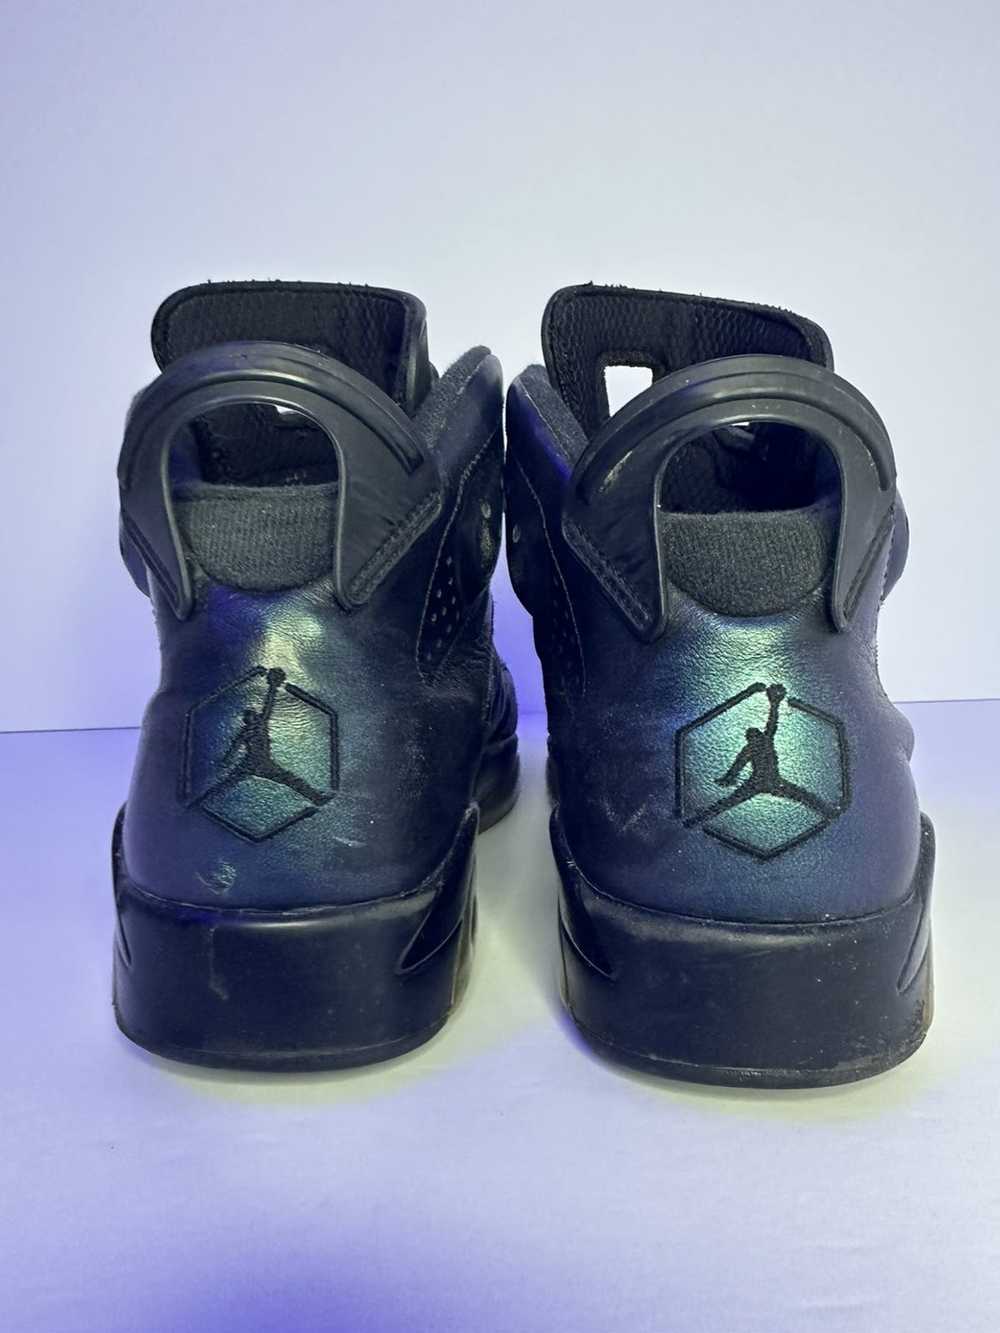 Jordan Brand Jordan 6 “All Star” Size 9.5 - image 4